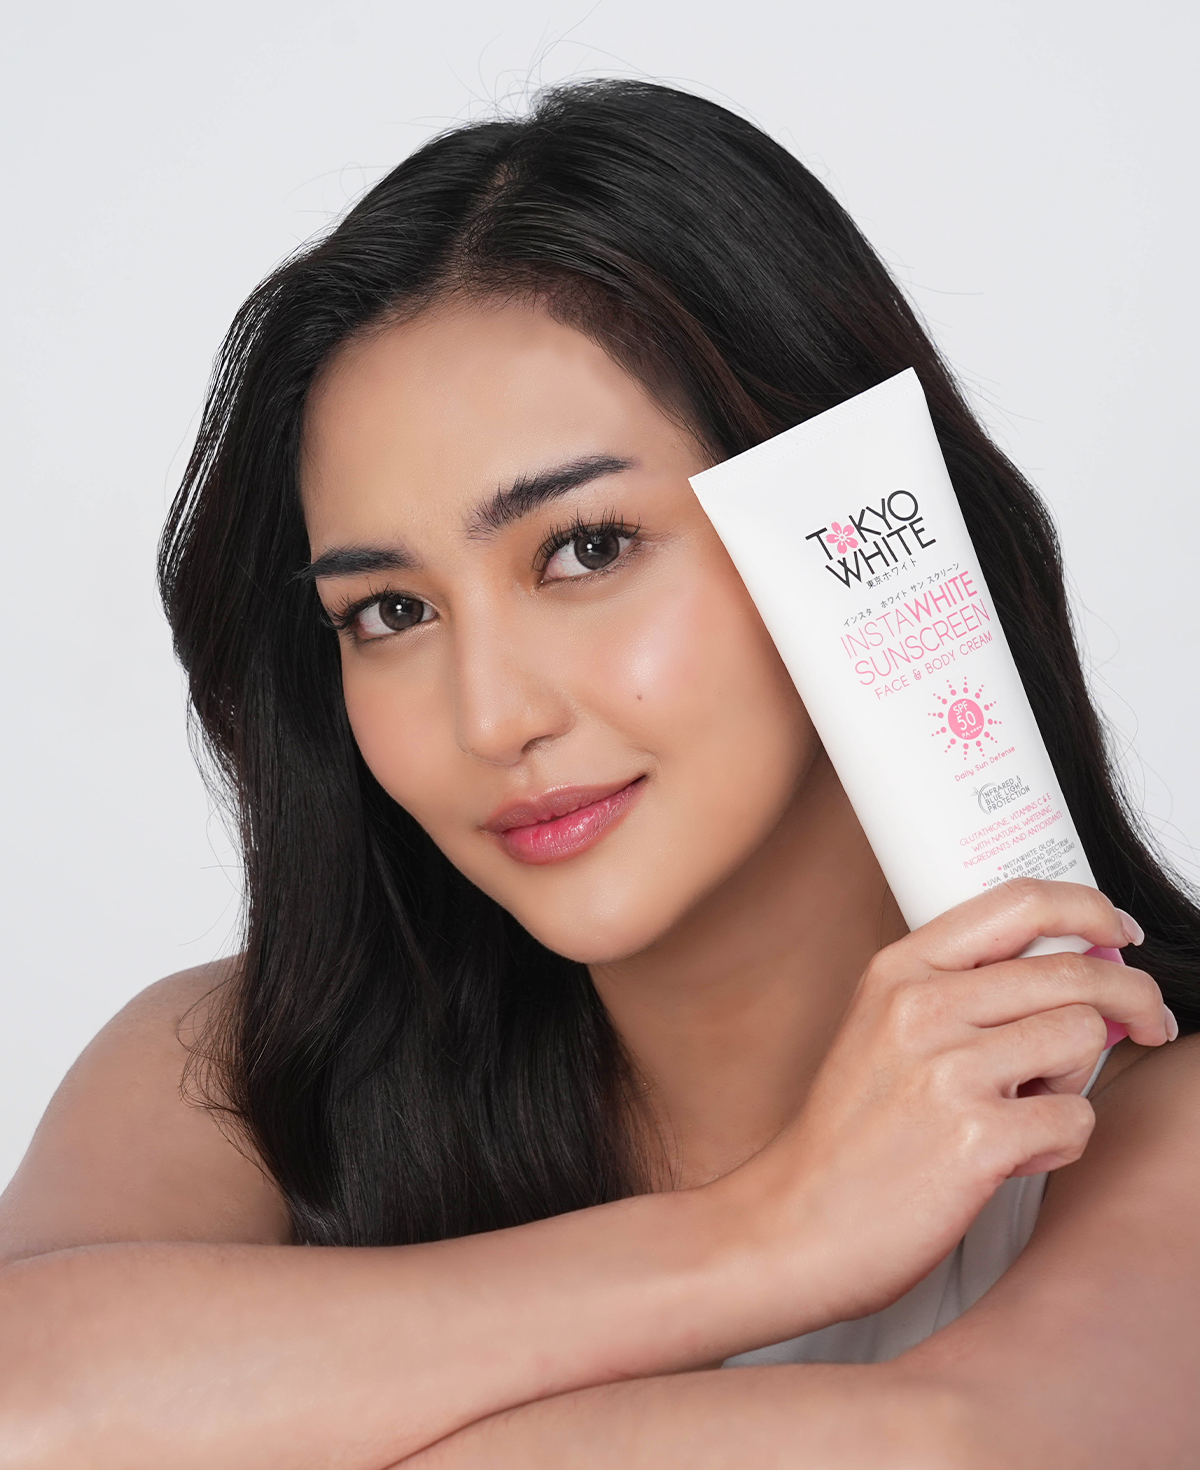 Tokyo White Instawhite Sunscreen Face & Body Cream (200ml)